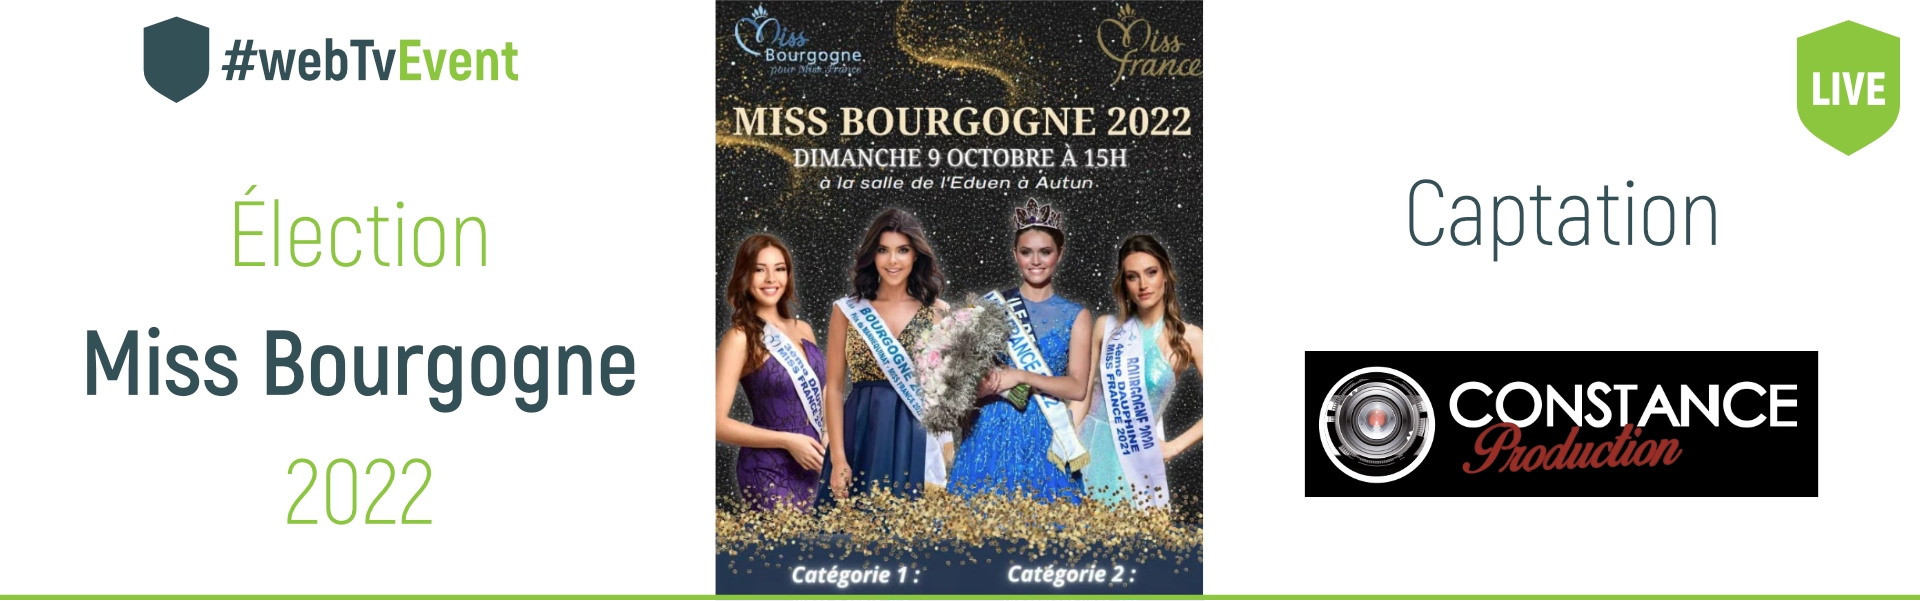 Élection Miss Bourgogne 2022 Lara LEBRETTON